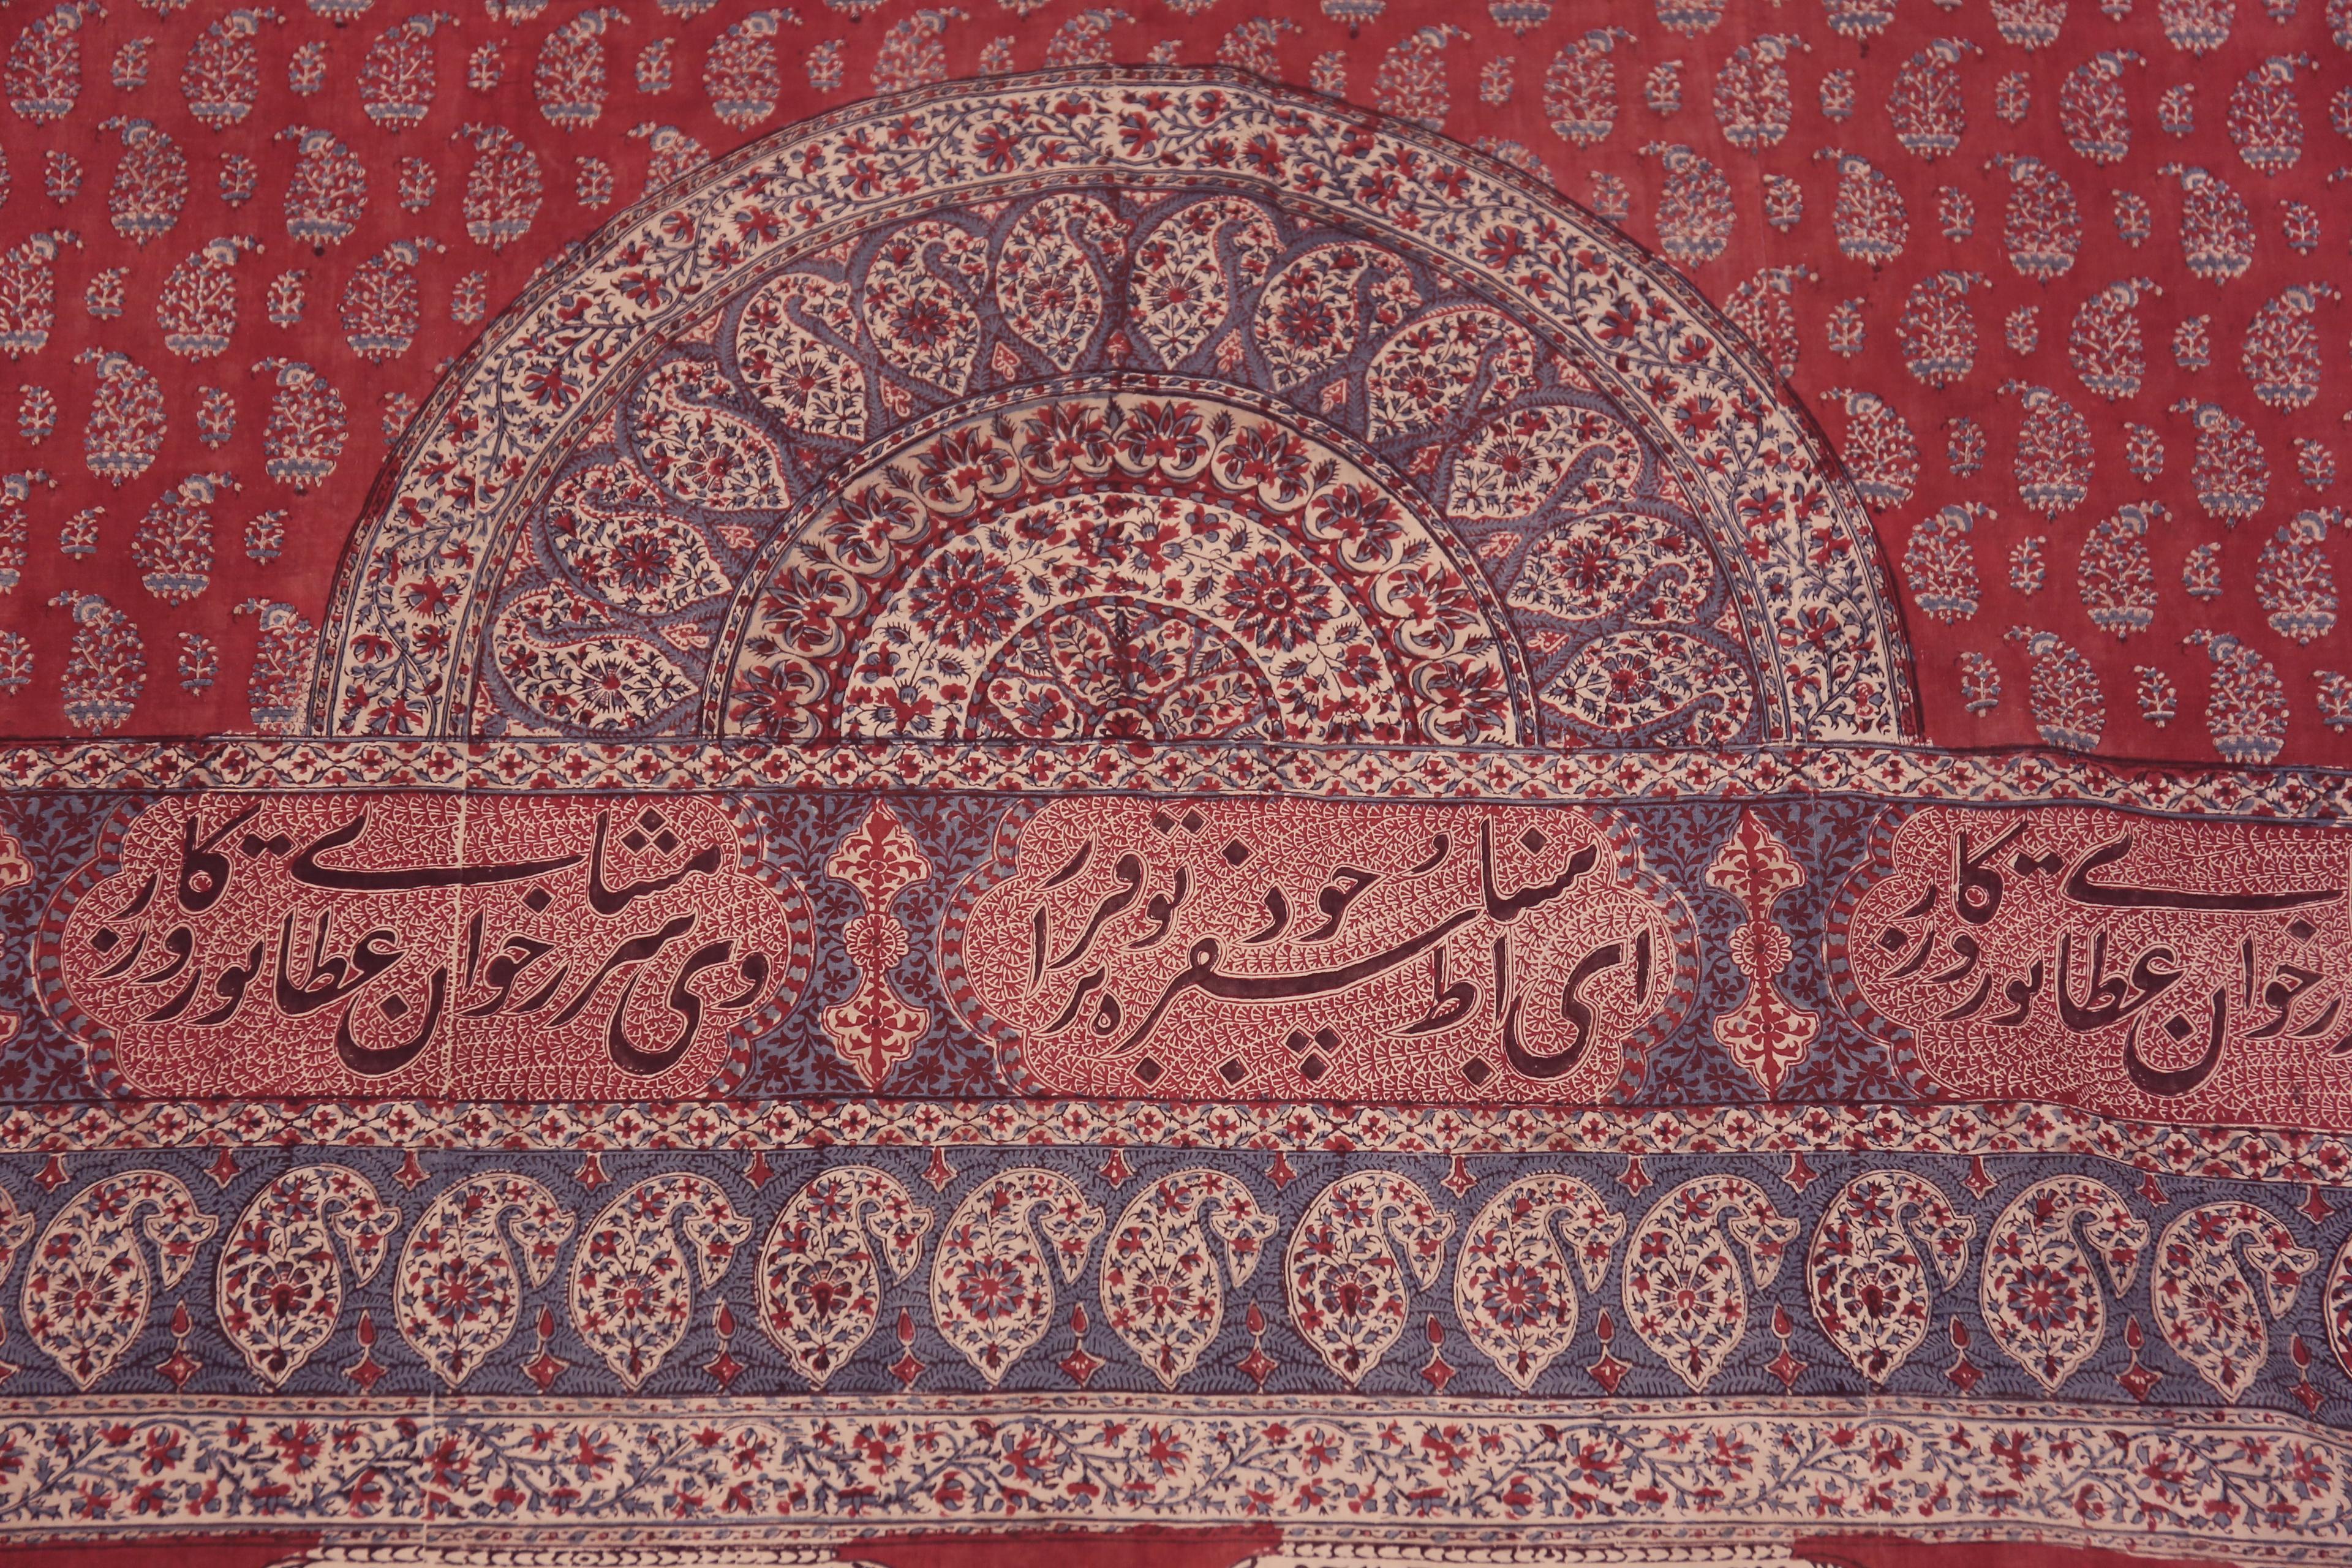 Cotton Antique Persian Khorassan Paisley Kalamkari / Qalamkari Textile  6'3